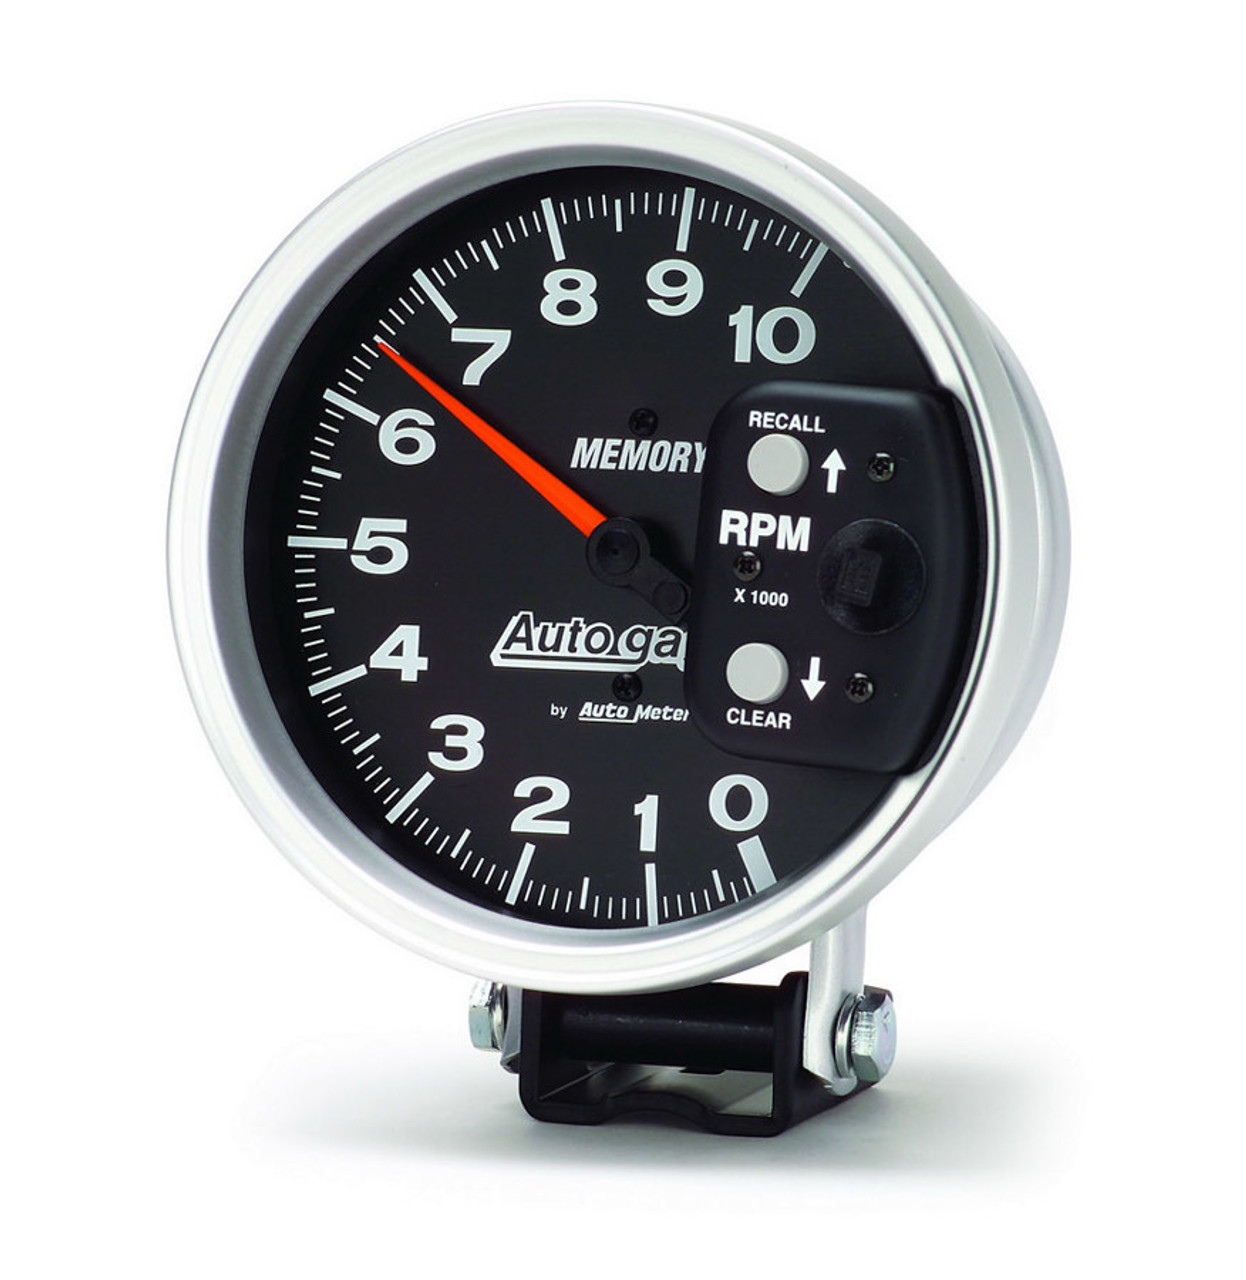 Autometer 5 inch 10,000 RPM w/ Peak Memory Pedestal Tachometer Auto Gage - Black - 233902